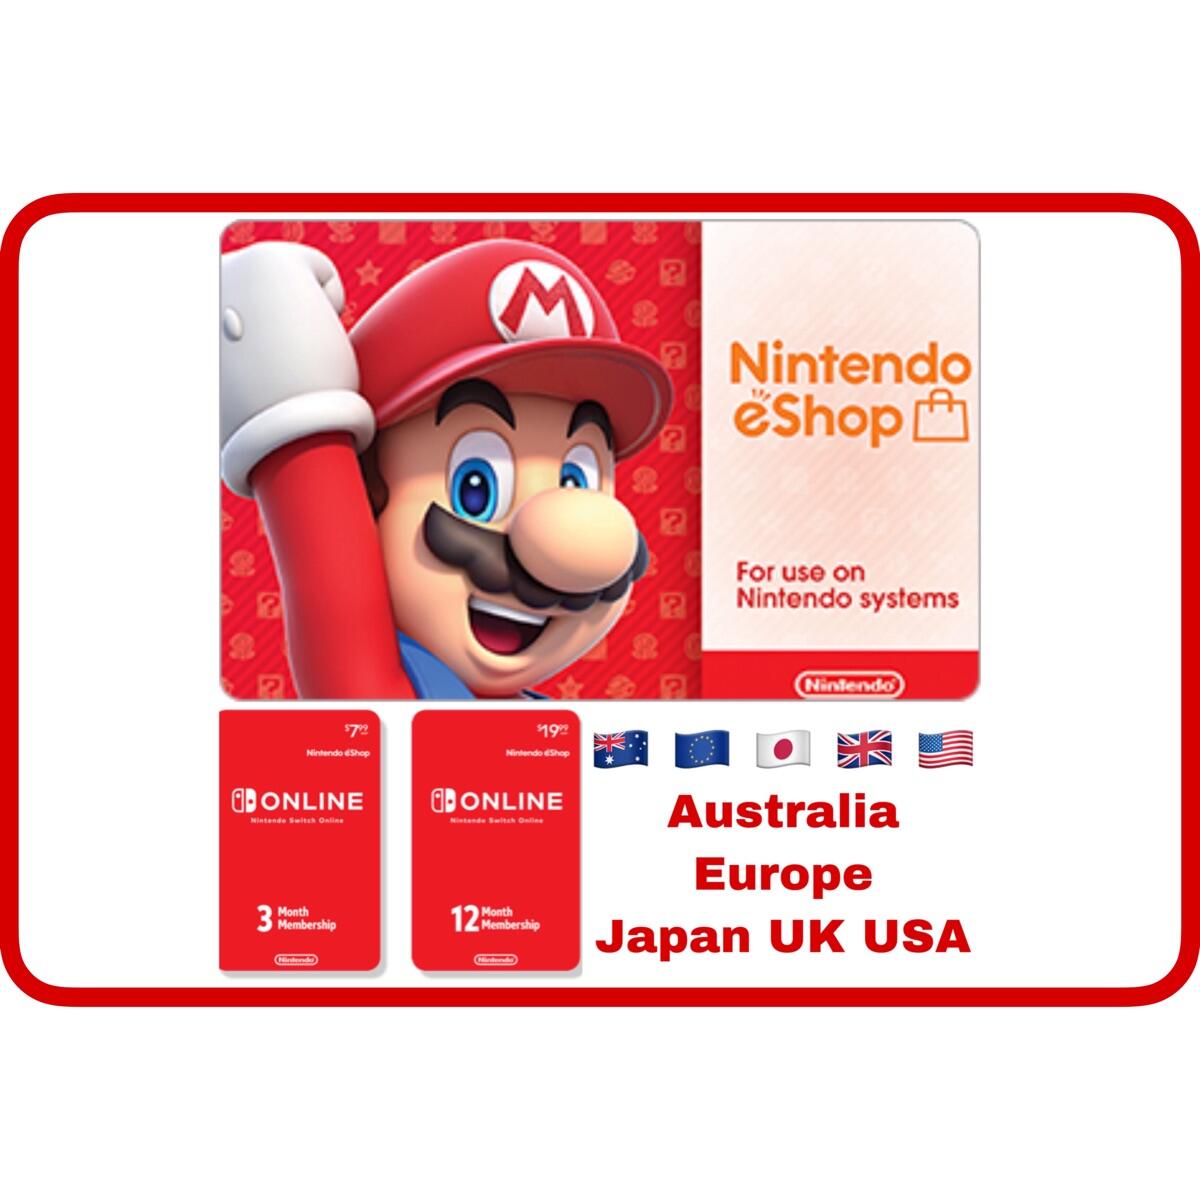 Ешоп карта. Игры Nintendo eshop США. Нинтендо ешоп США 99. Подарочная карта Nintendo eshop Австралия. Карта на деньги в Нинтендо ешоп.